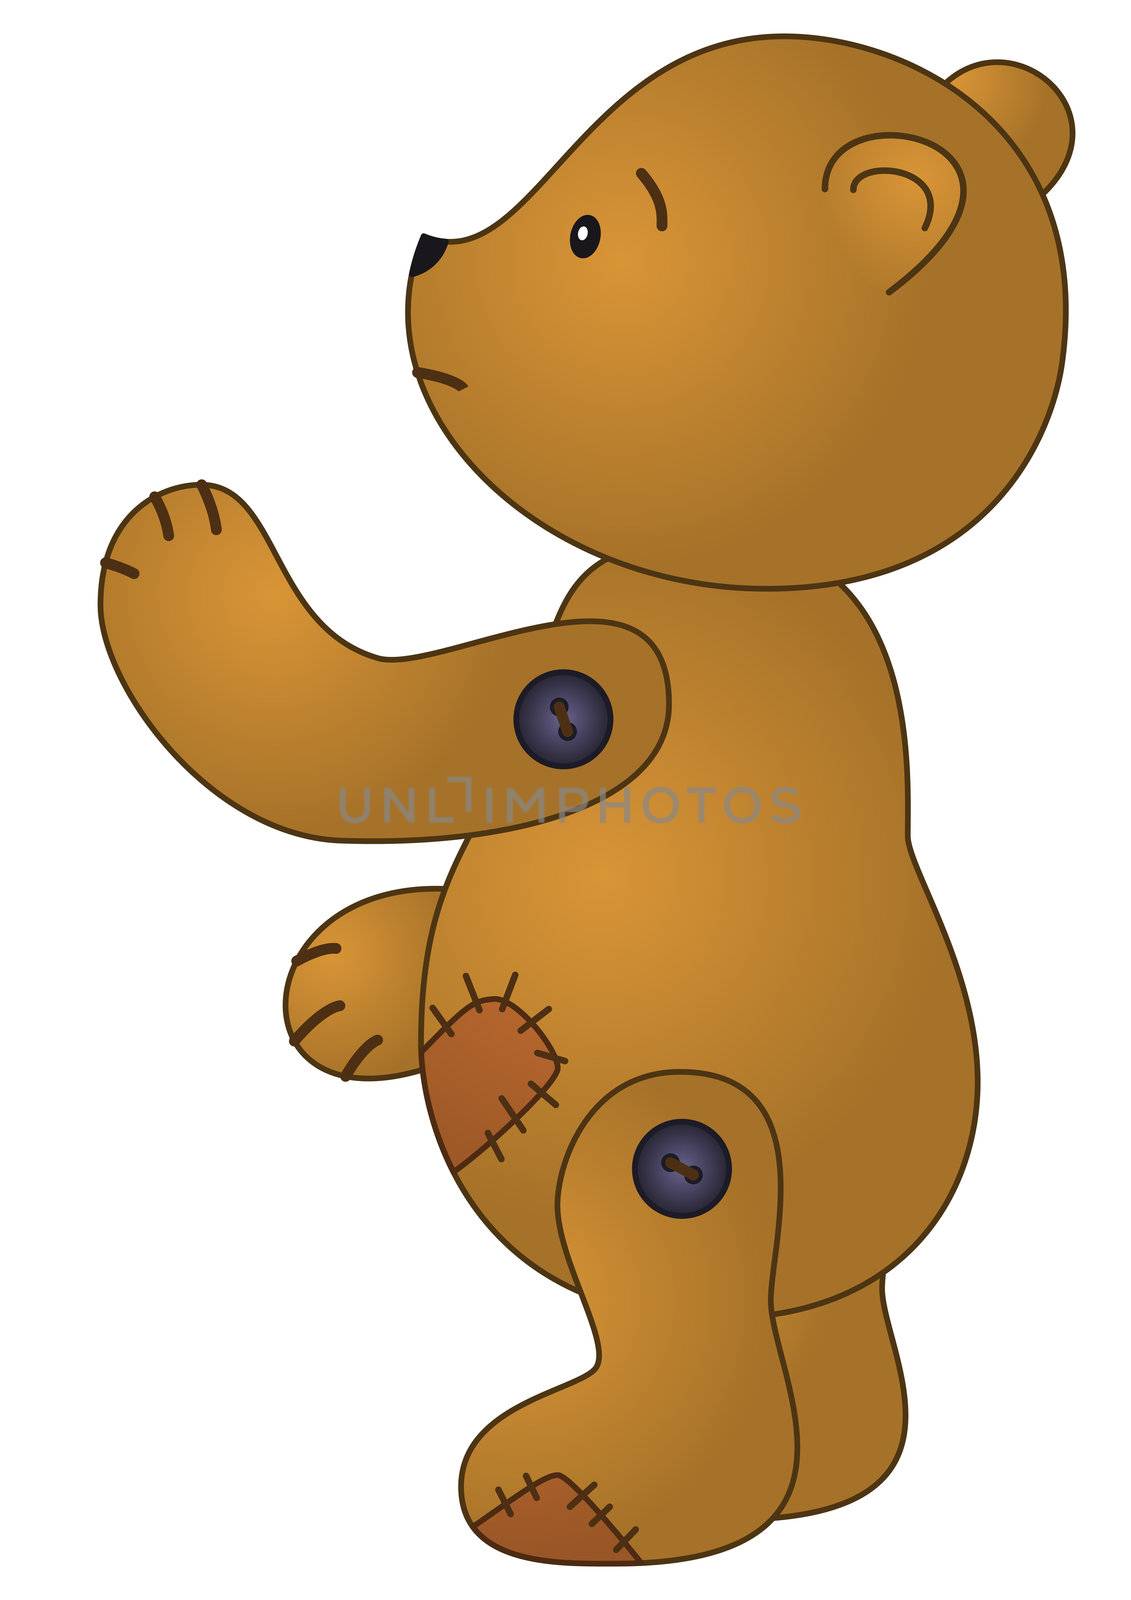 Sad teddy bear by alexcoolok